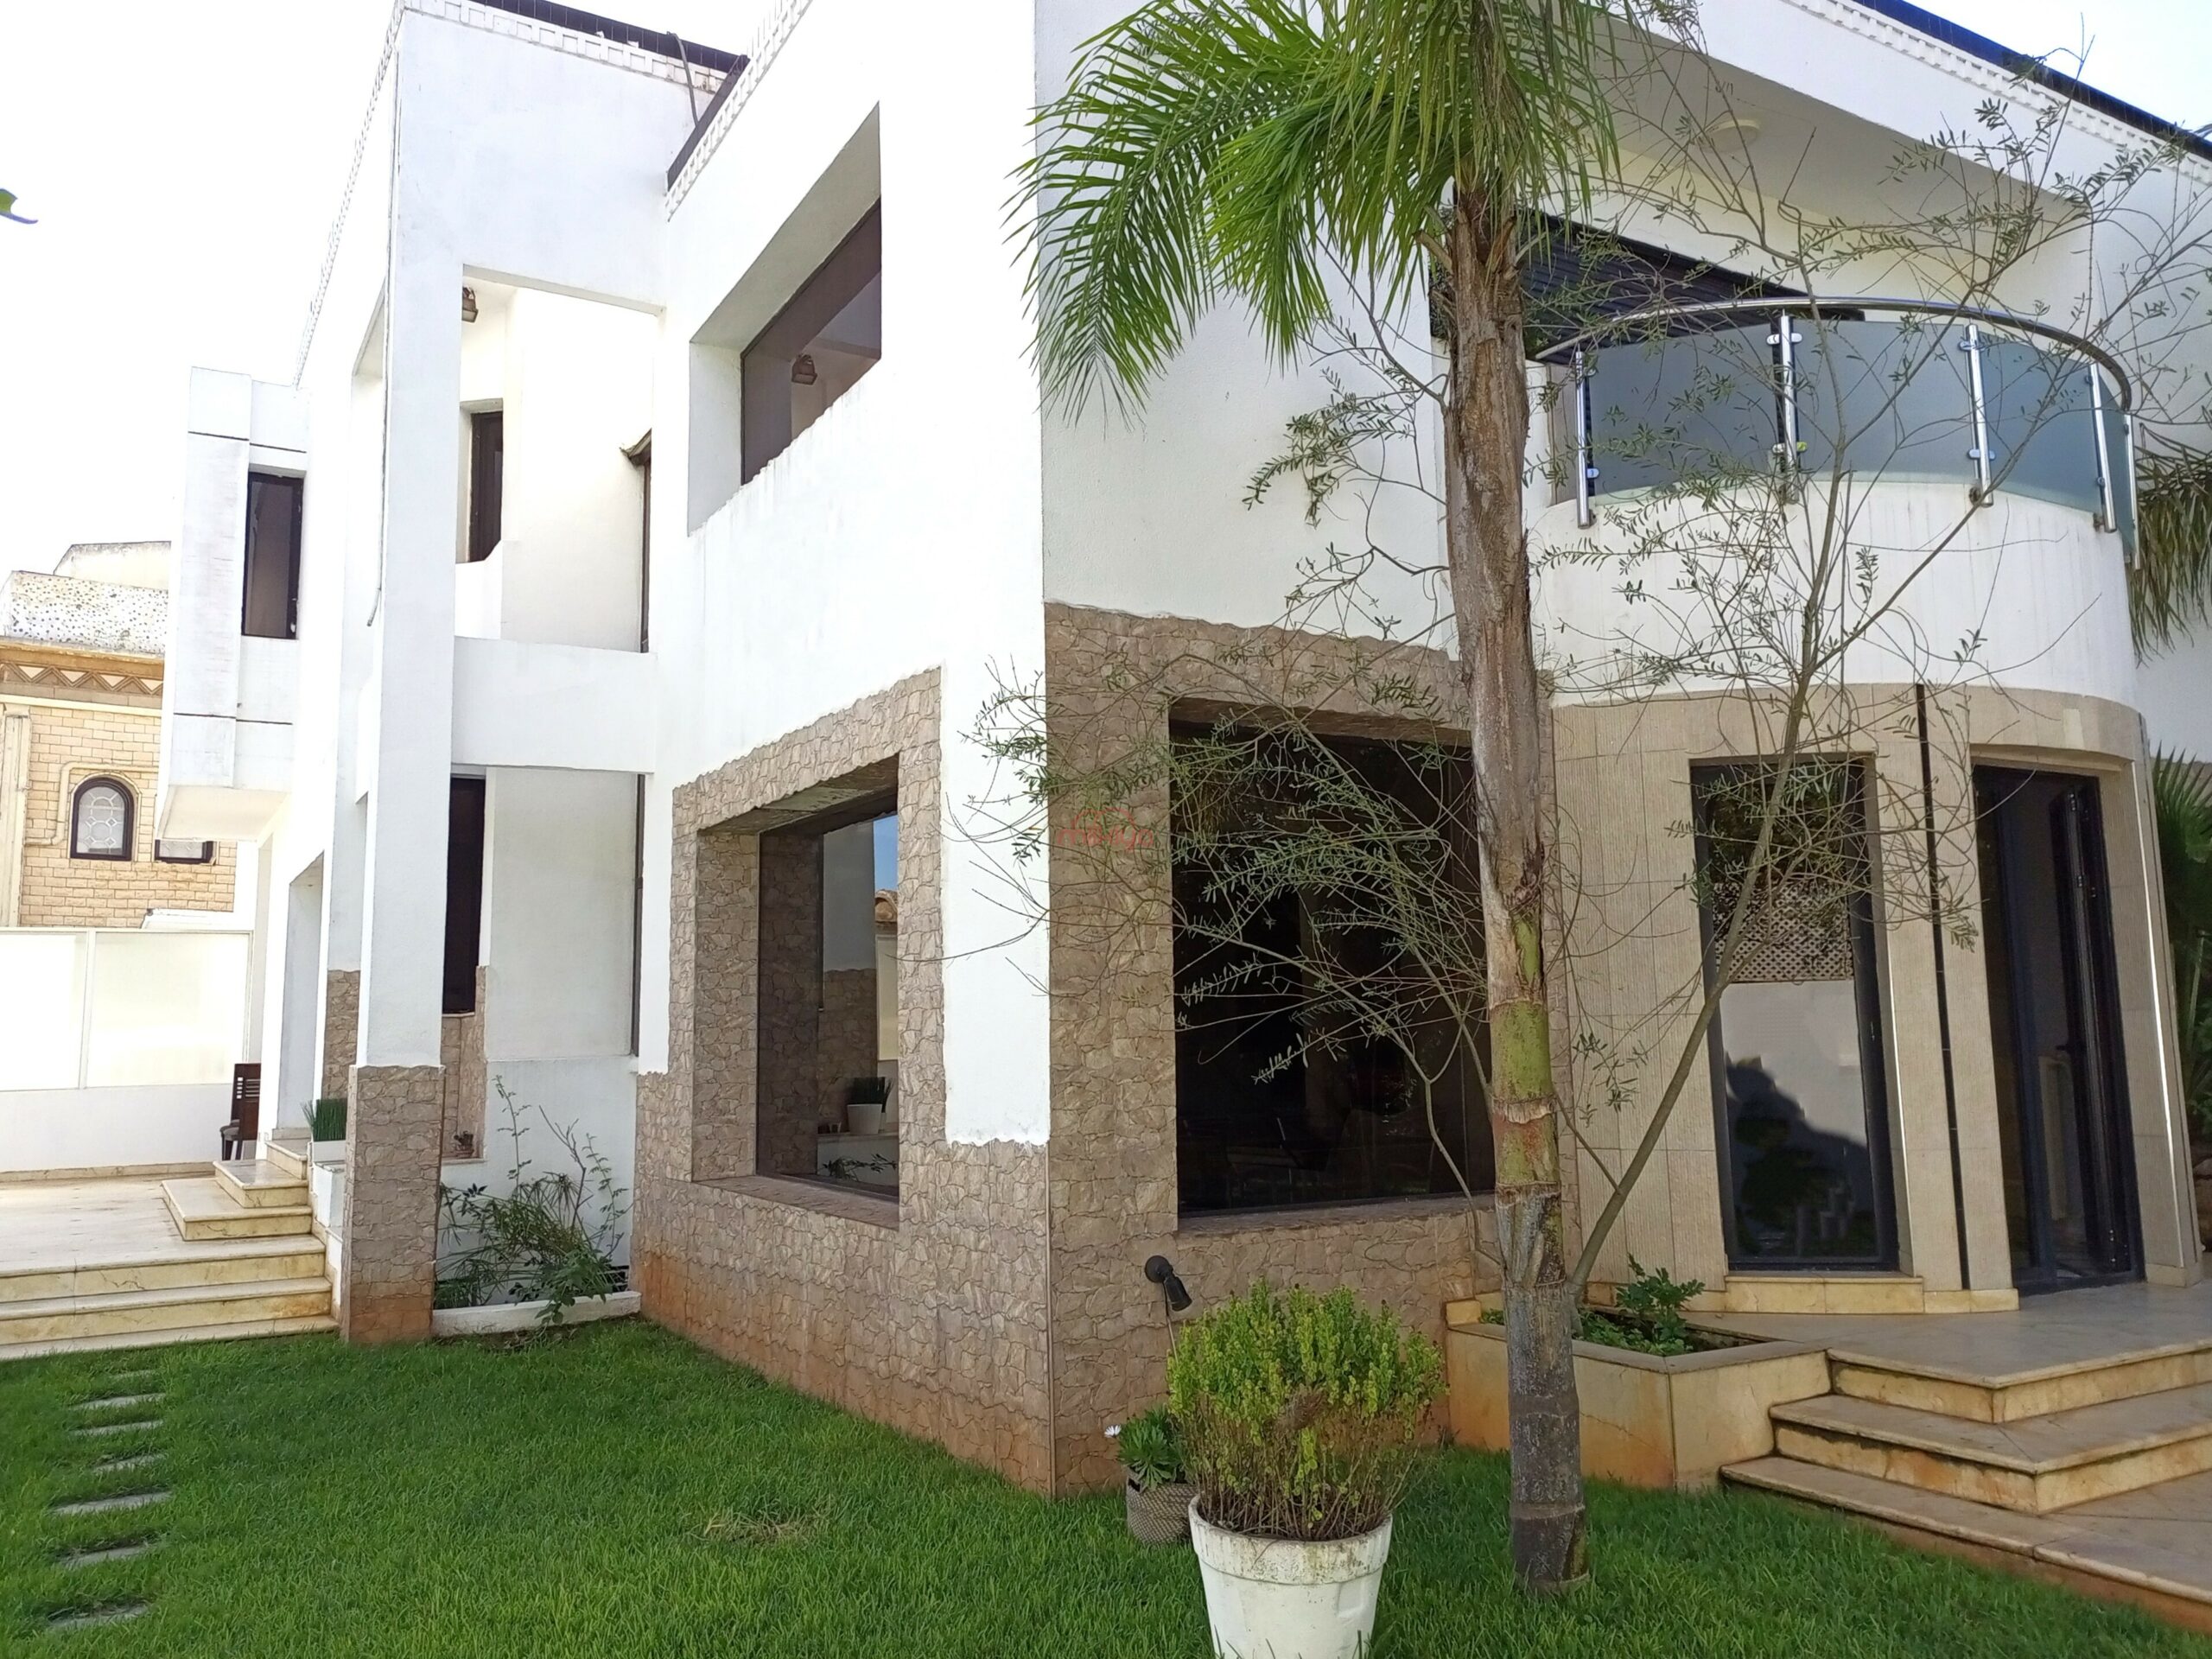 3982 - Location Villa 1000 m² à Casablanca